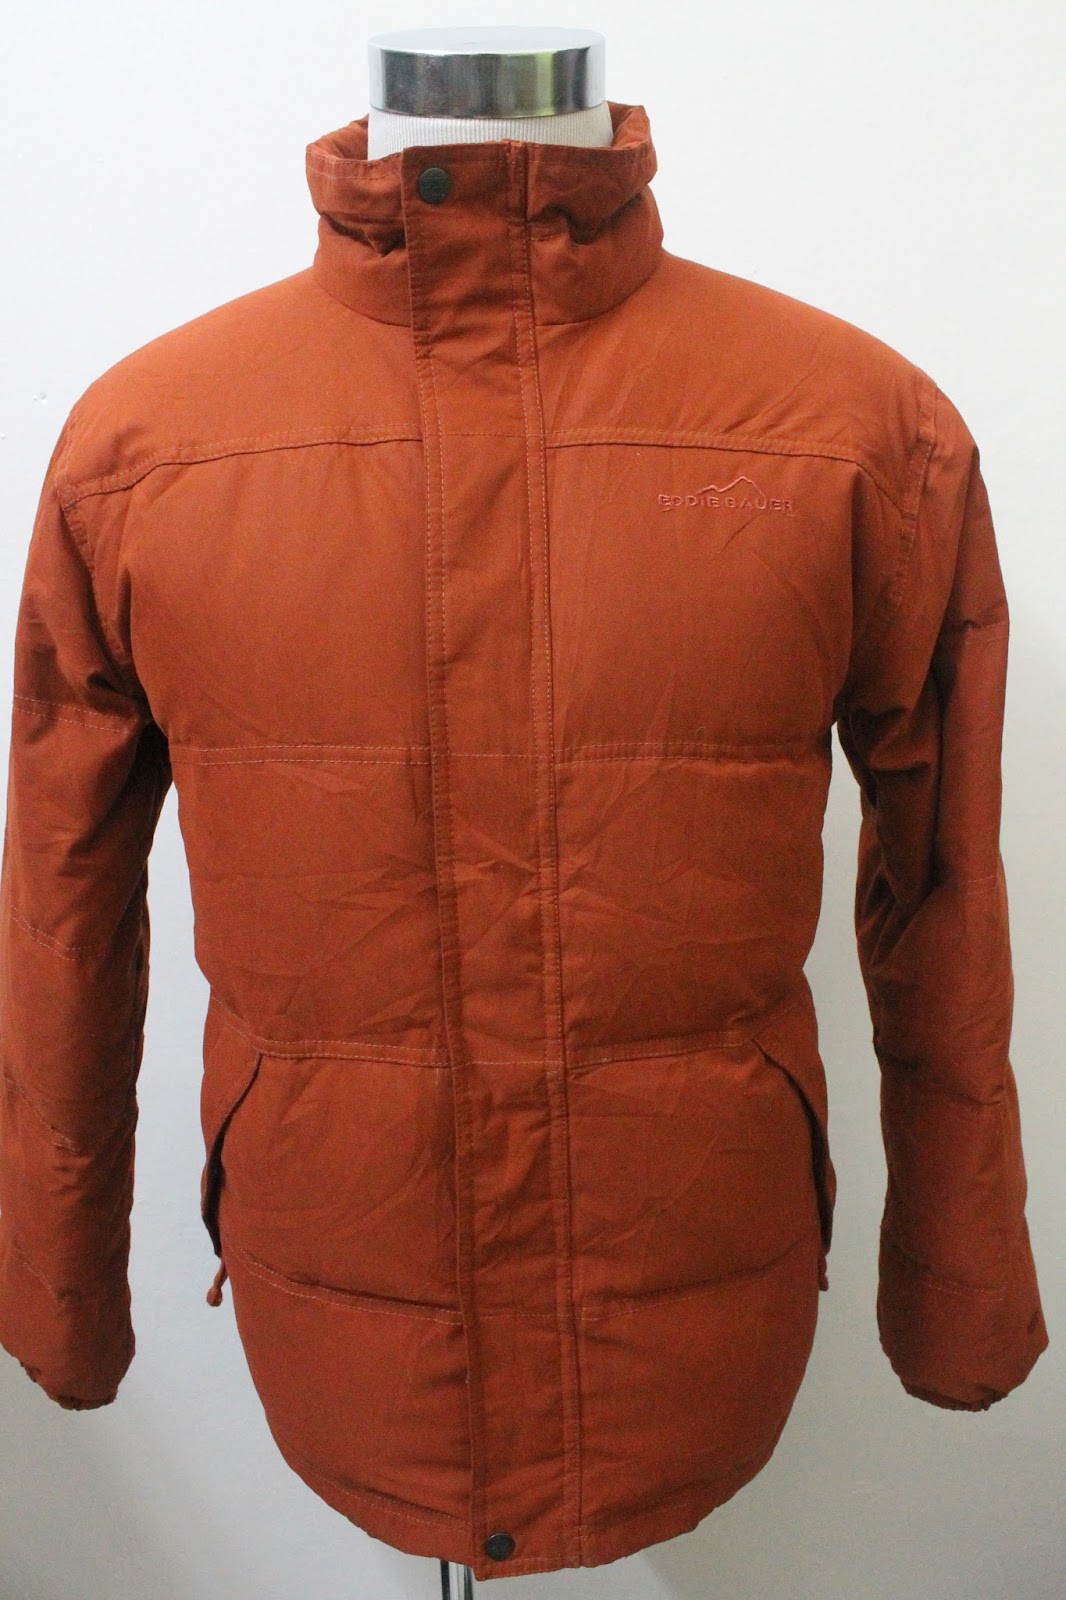 BUNDLEBARANGBAEK: Original EDDIE BAUER Winter Jacket size S ( SOLD OUT )